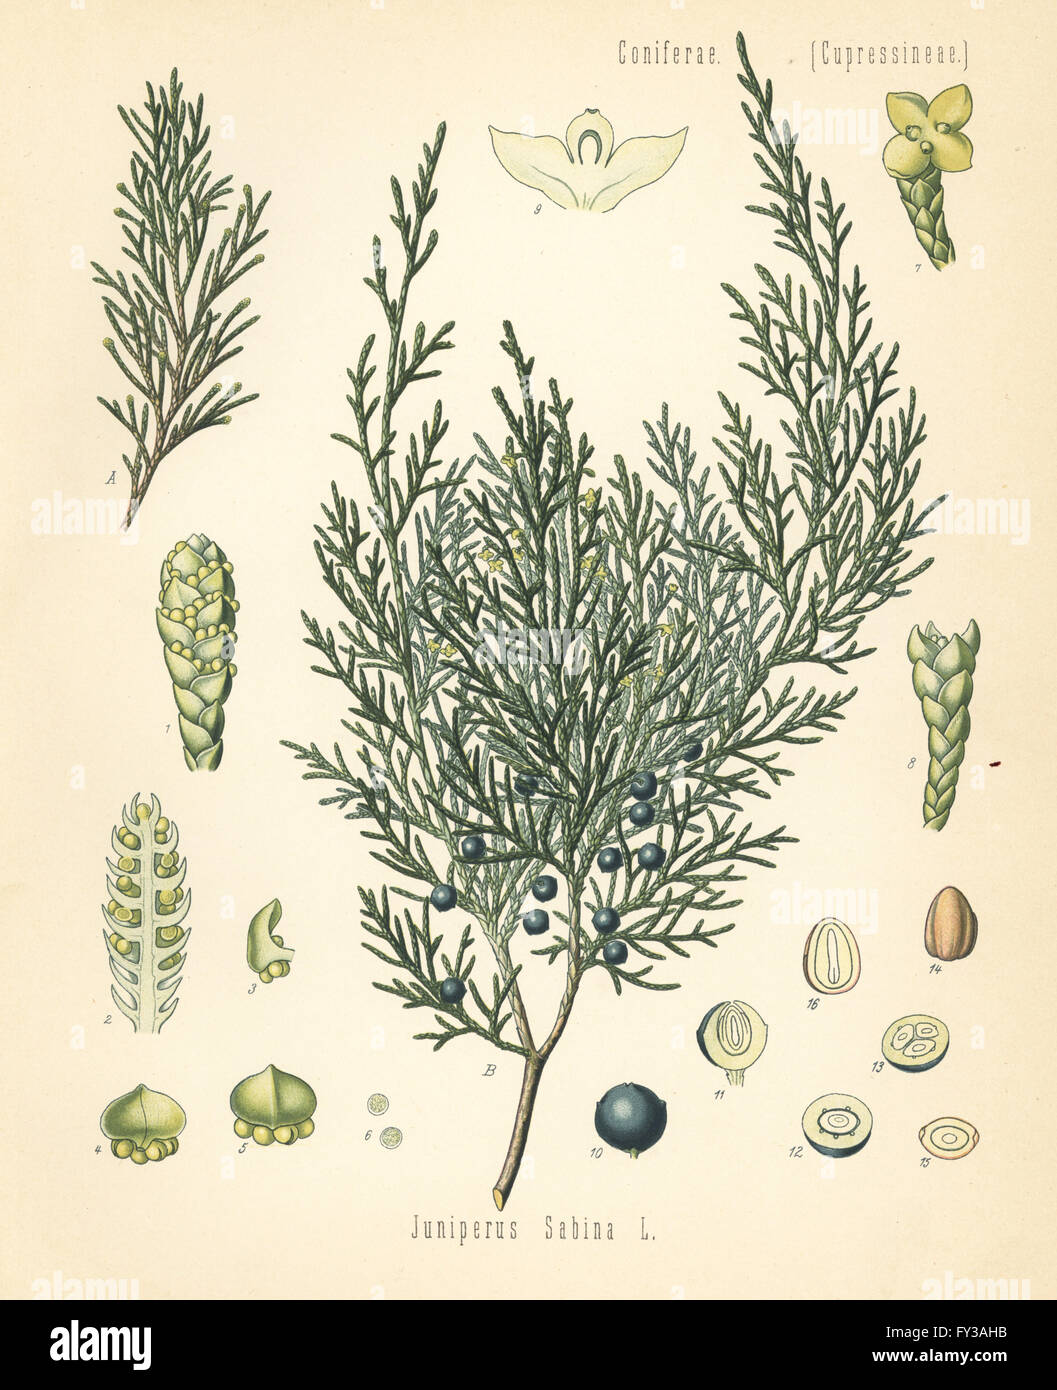 Savin juniper or savin, Juniperus sabina. Chromolithograph after a botanical illustration from Hermann Adolph Koehler's Medicinal Plants, edited by Gustav Pabst, Koehler, Germany, 1887. Stock Photo